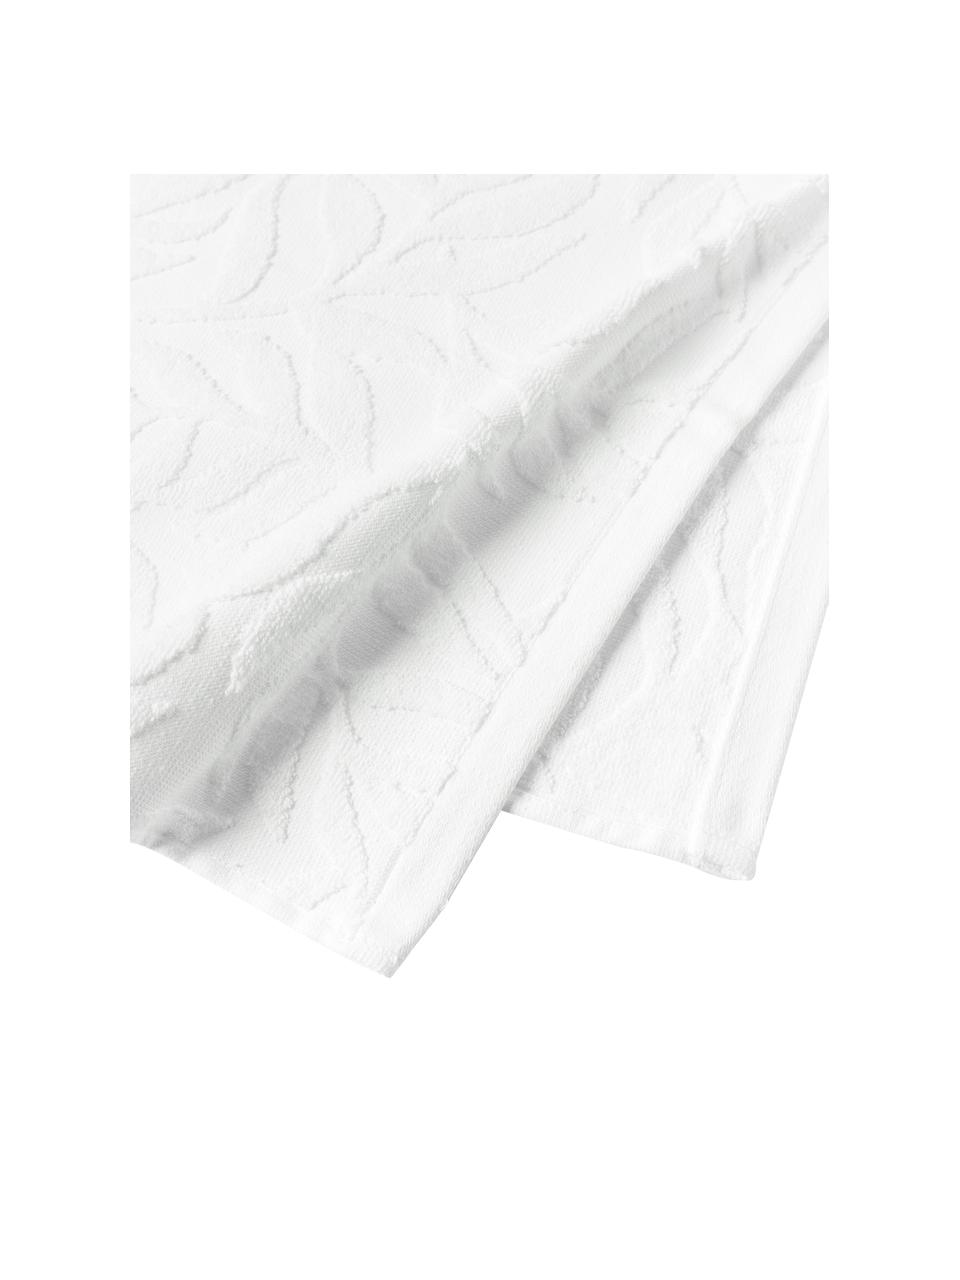 Toalla de algodón Leaf, Blanco, Toalla ducha, An 70 x L 140 cm